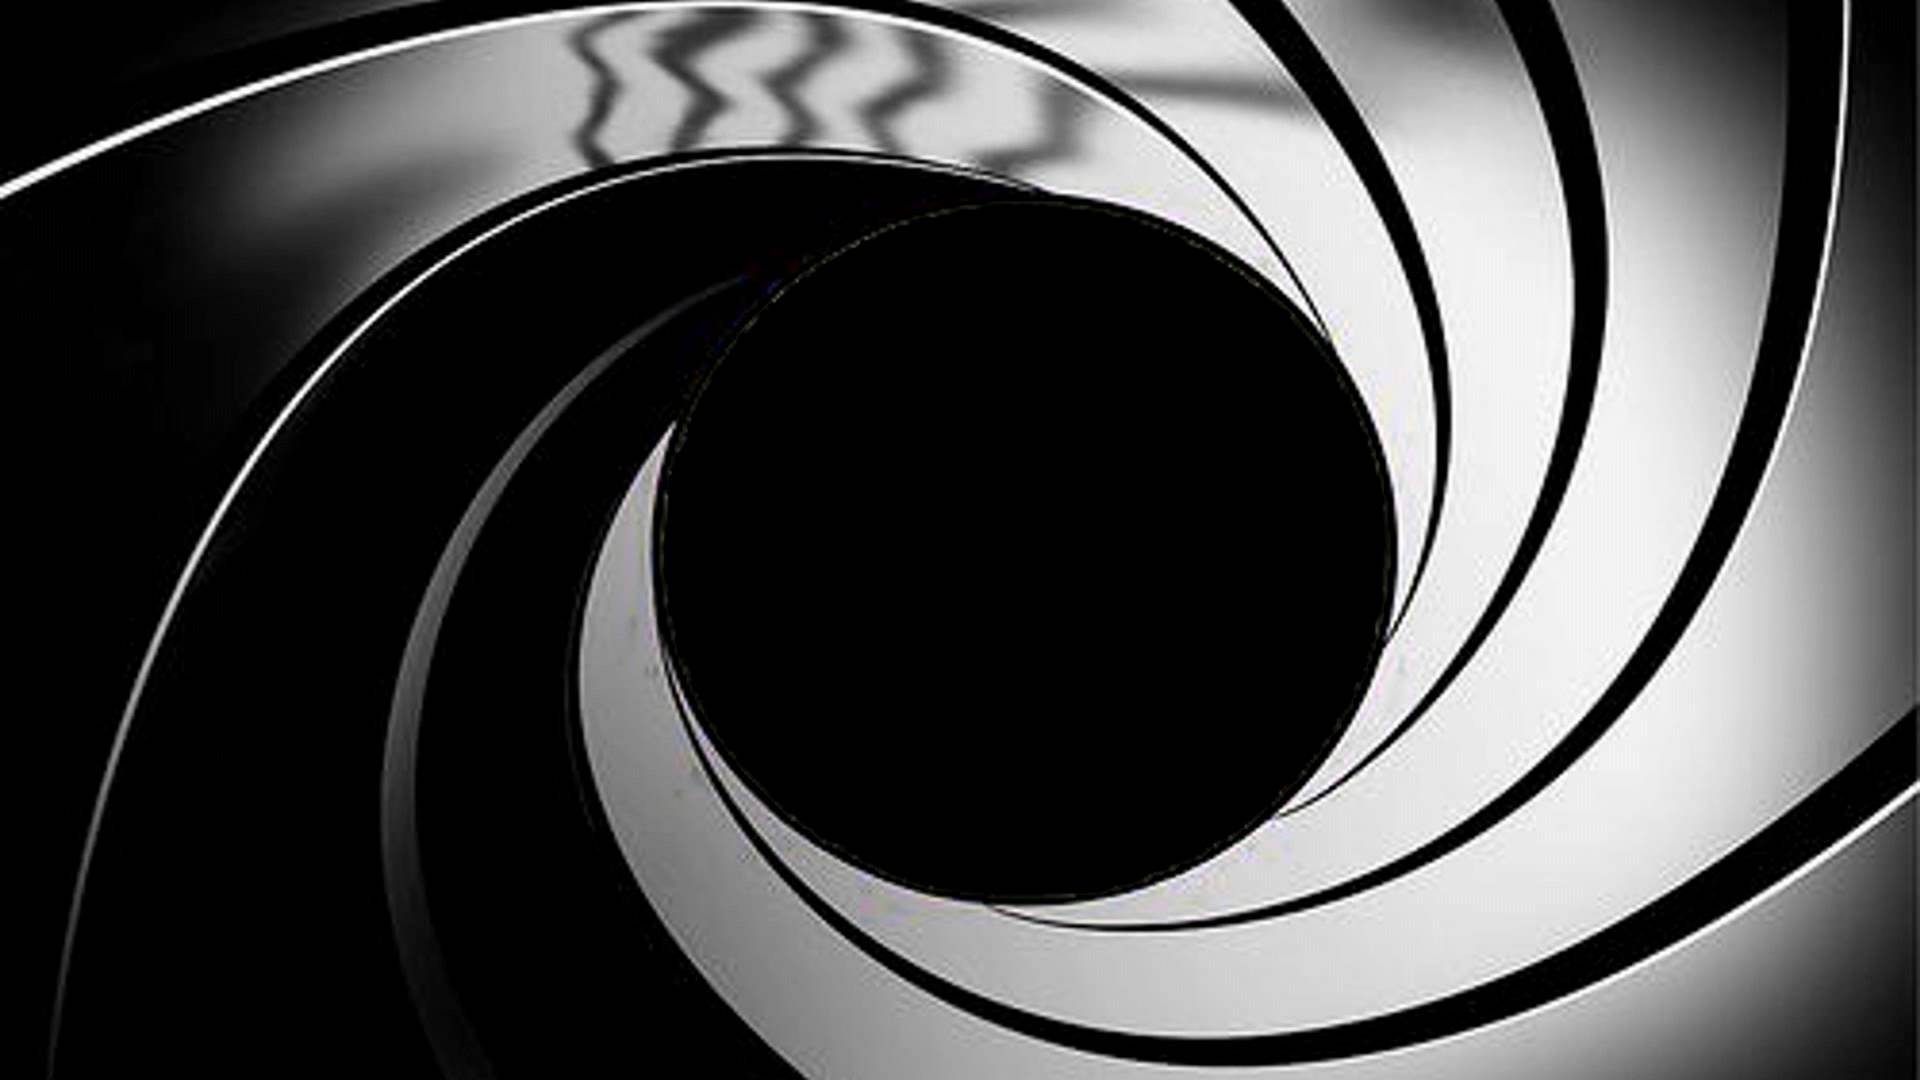 James Bond Gun Barrel Wallpaper